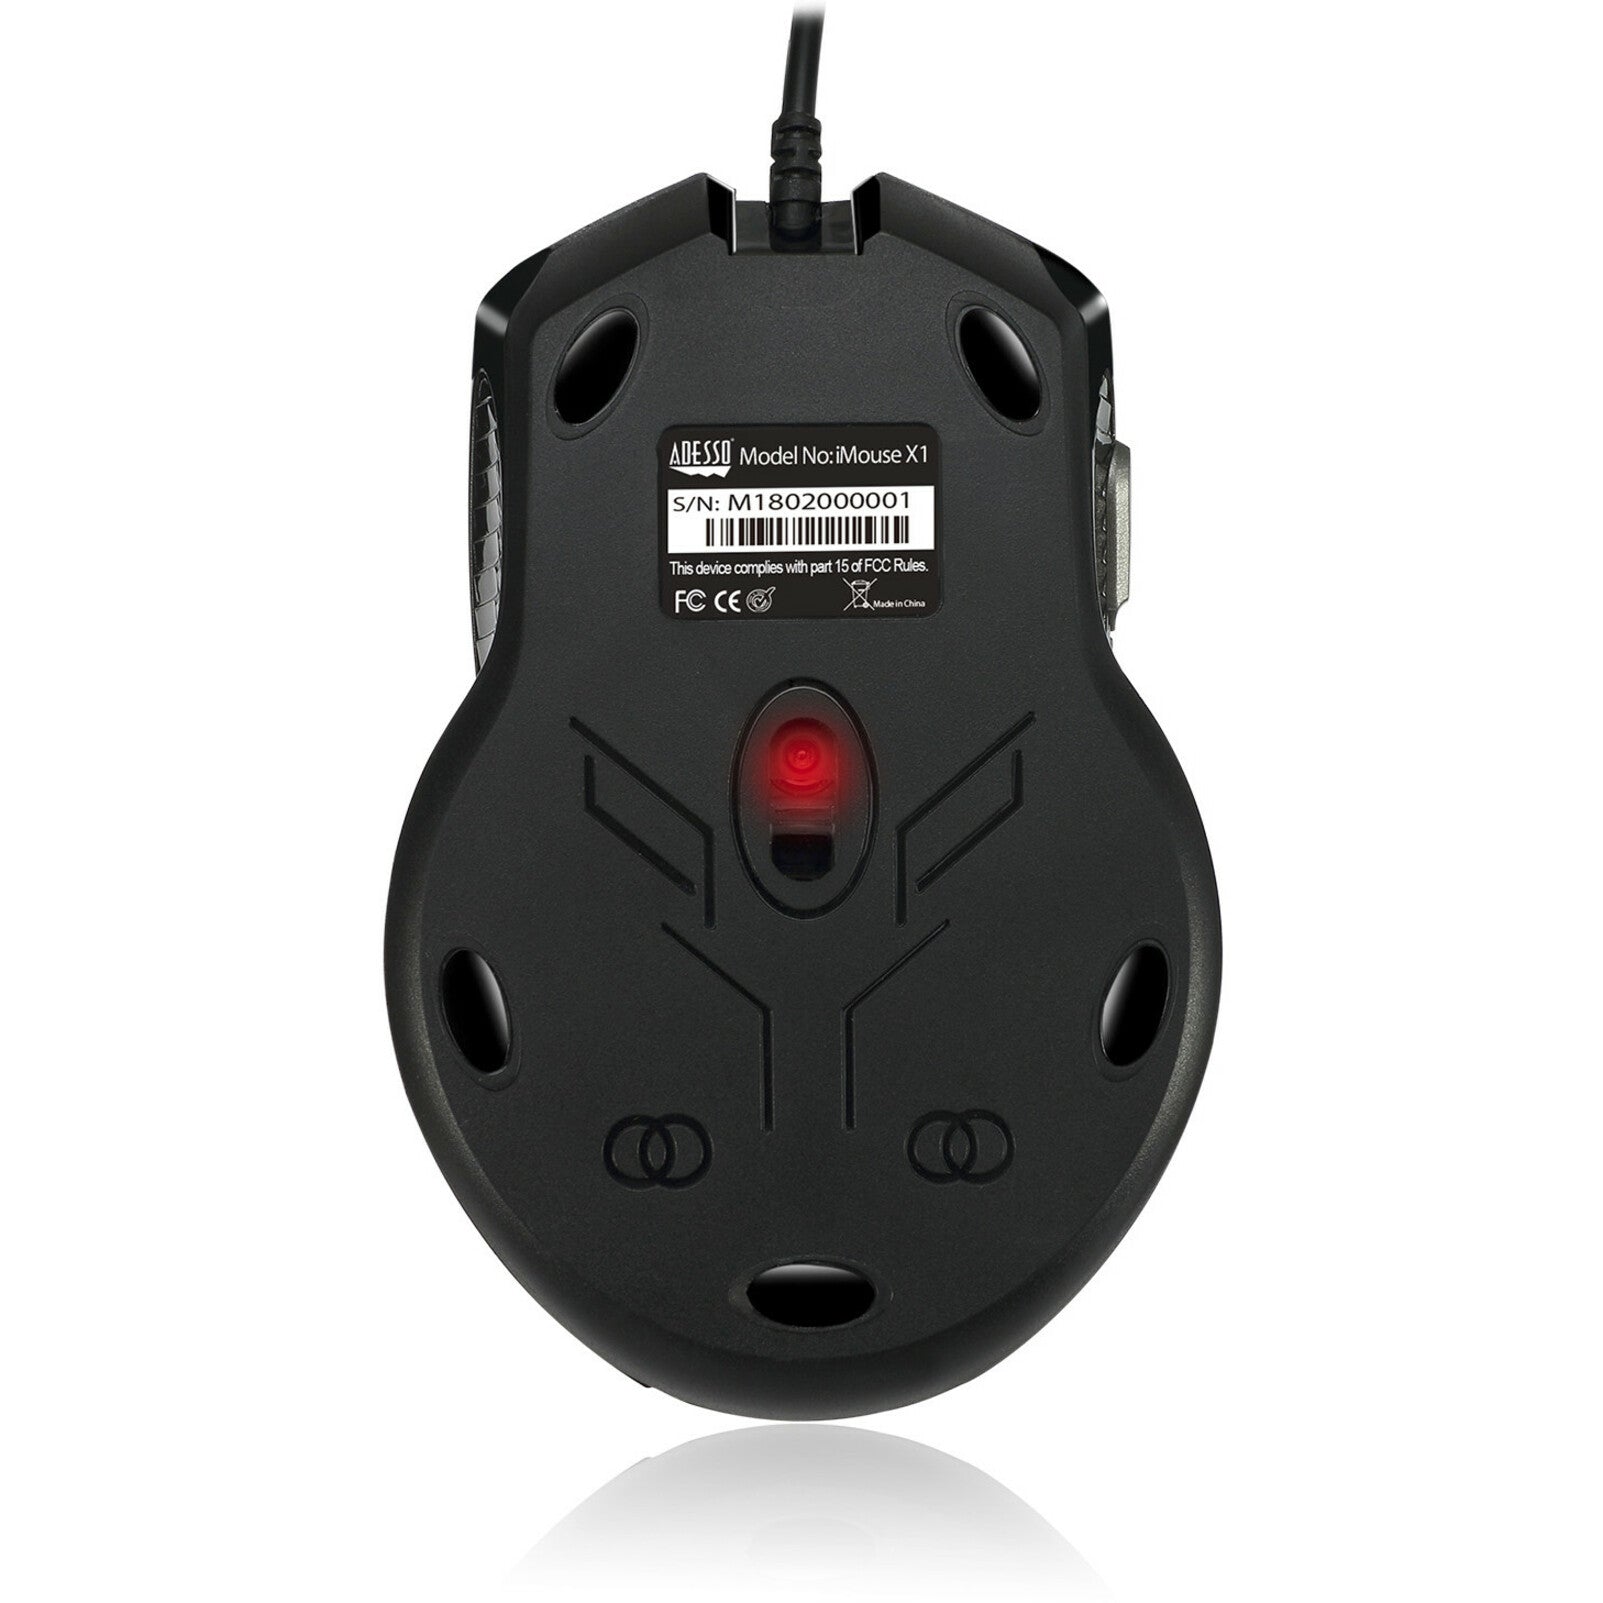 Adesso IMOUSE X1 Multi-Farbe 6-Tasten Gaming-Maus Ergonomische Passform 3200 DPI USB Wired